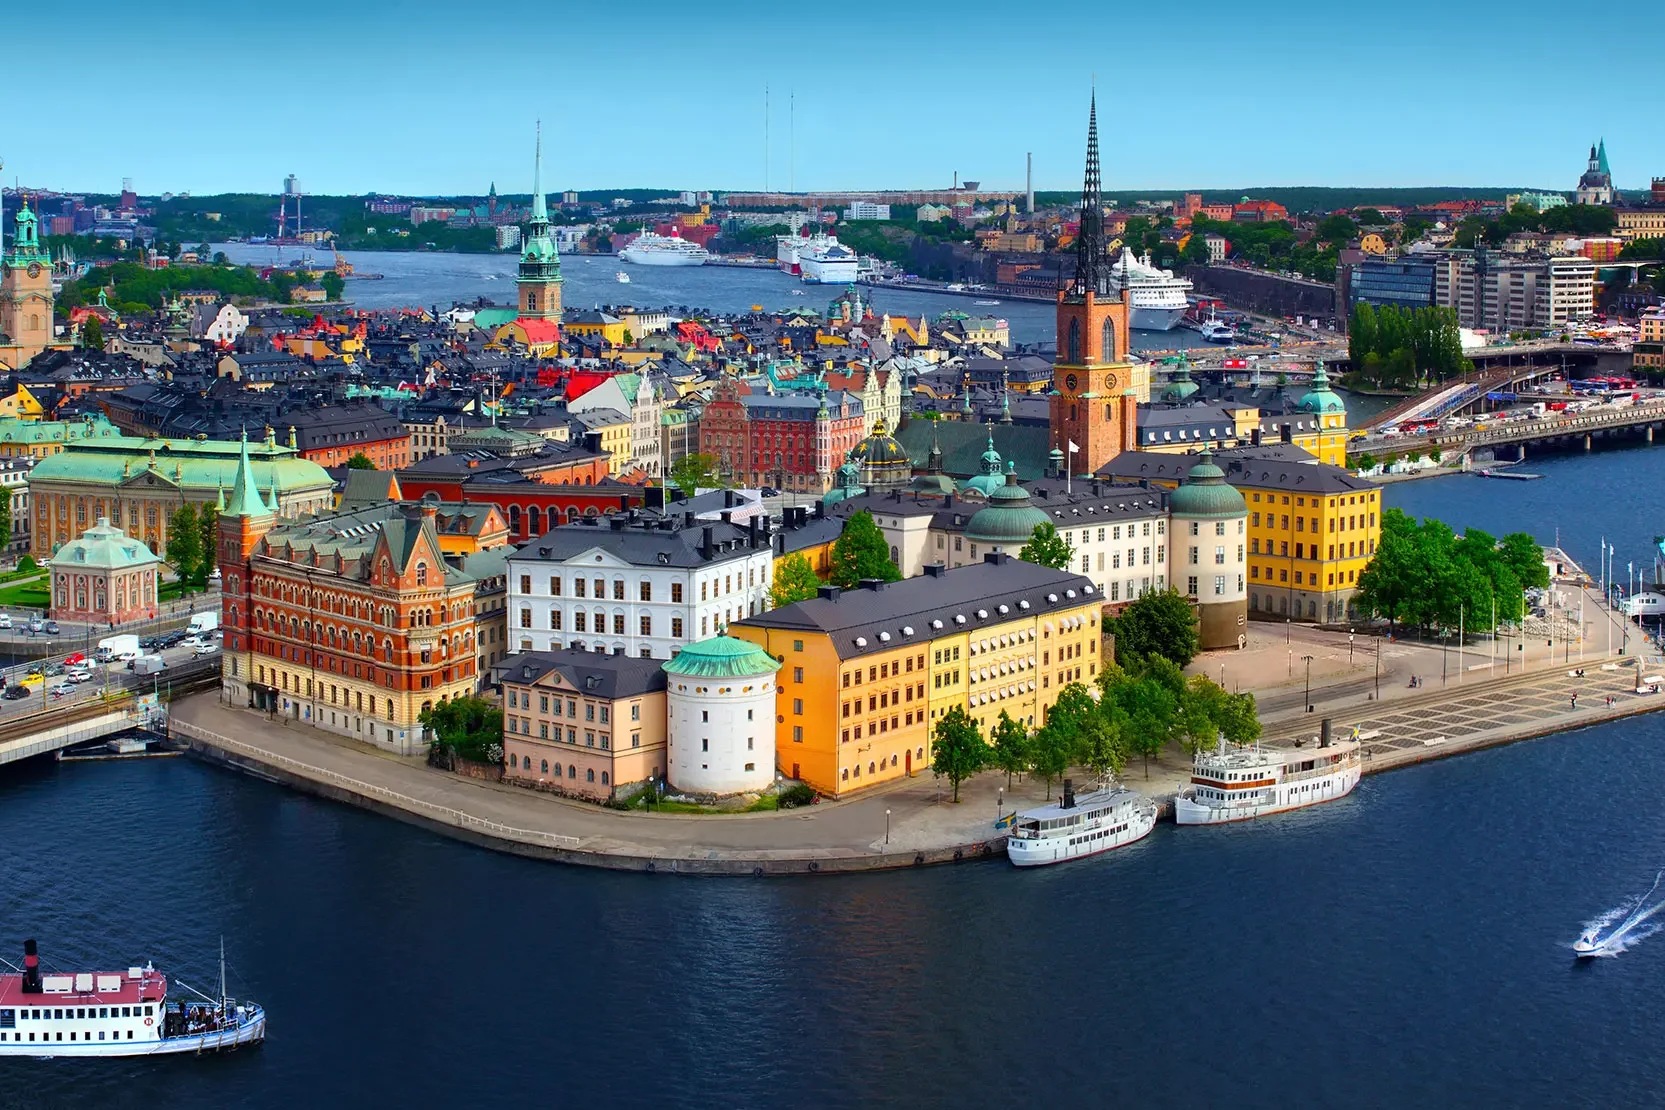 Stockholm cityscape